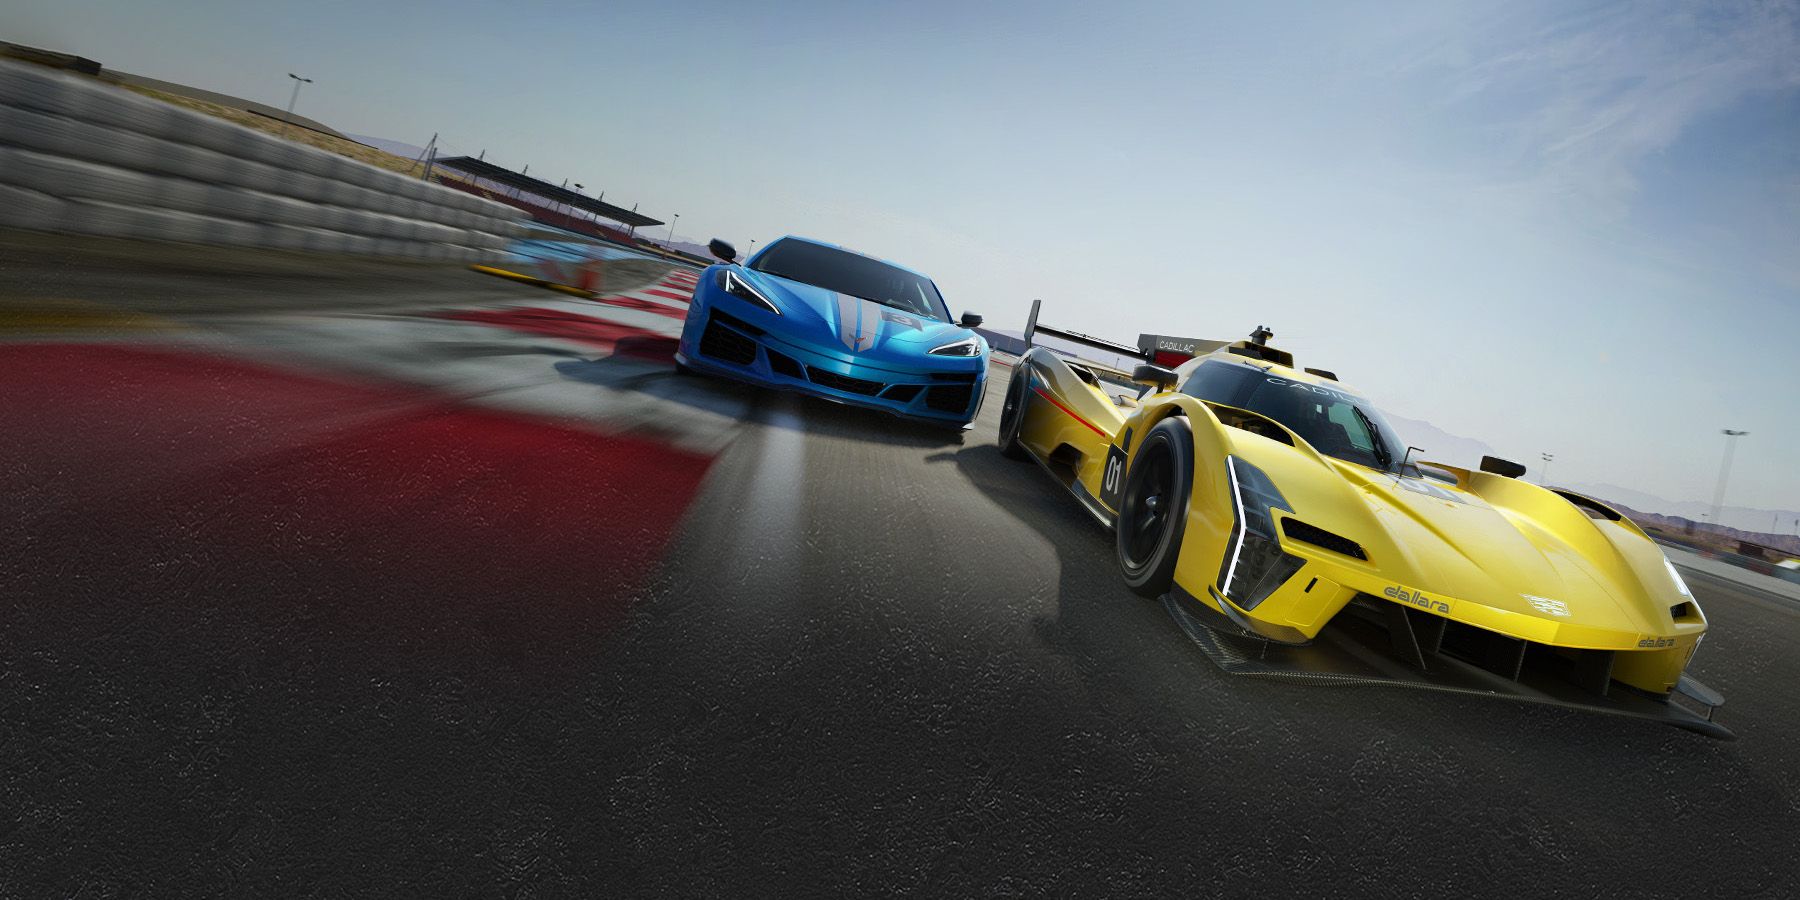 Forza Motorsport Artwork